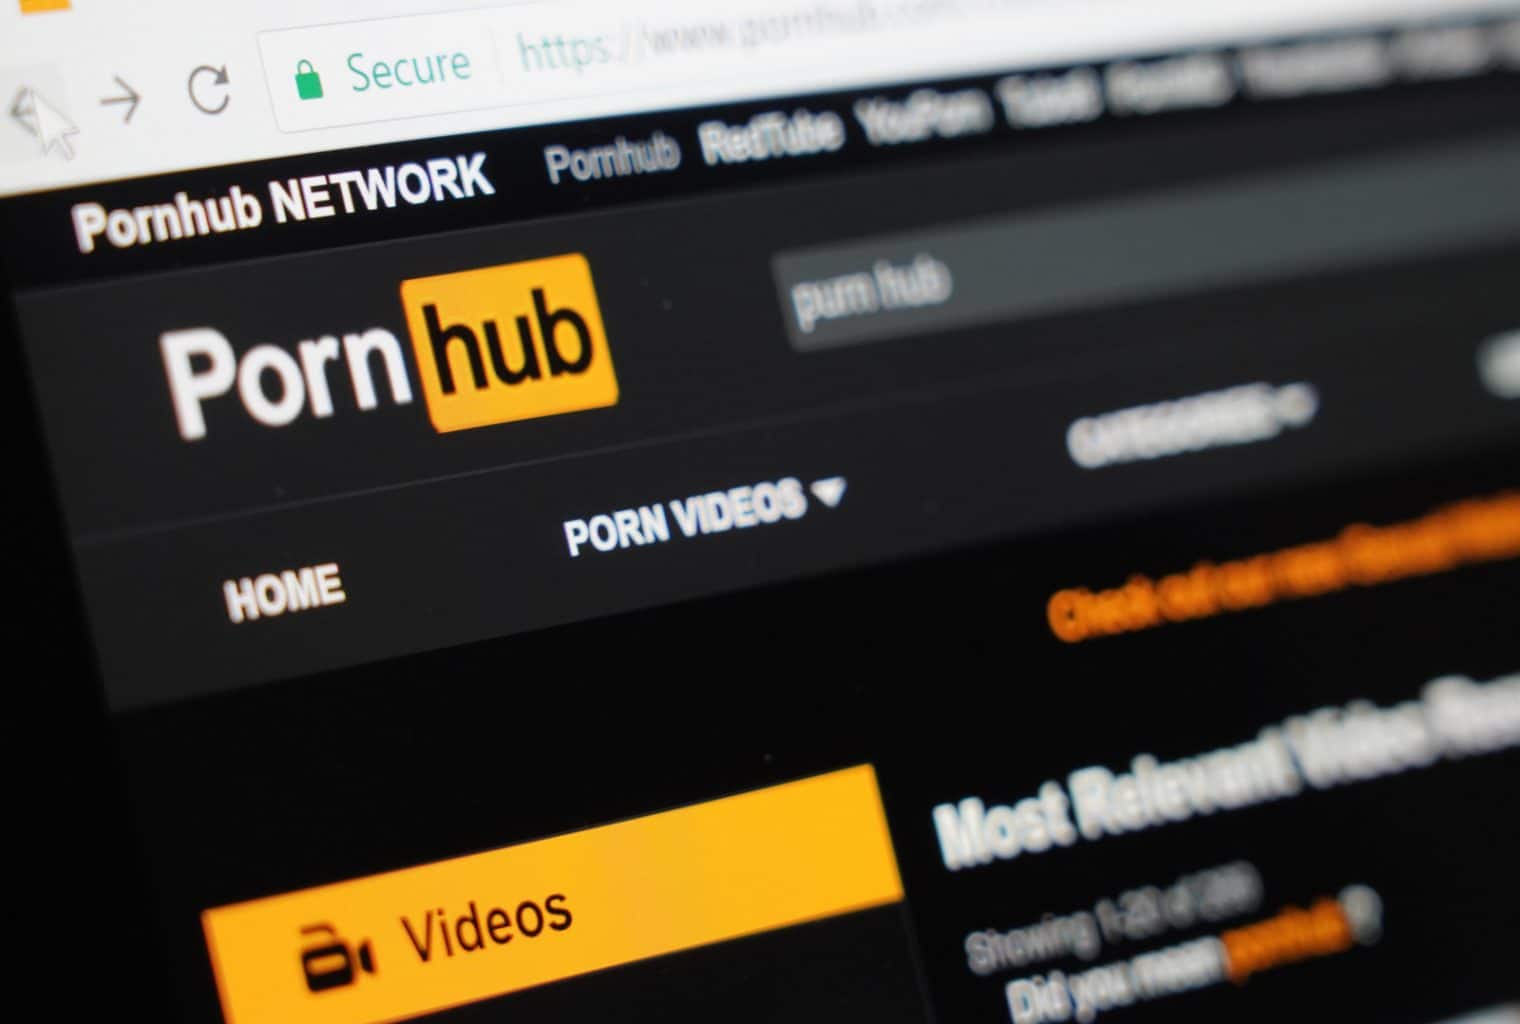 Xnxx Top Ten Video Unblock - Free Online Porn Proxy: Find the Best Online Web Proxy to Unblock ...